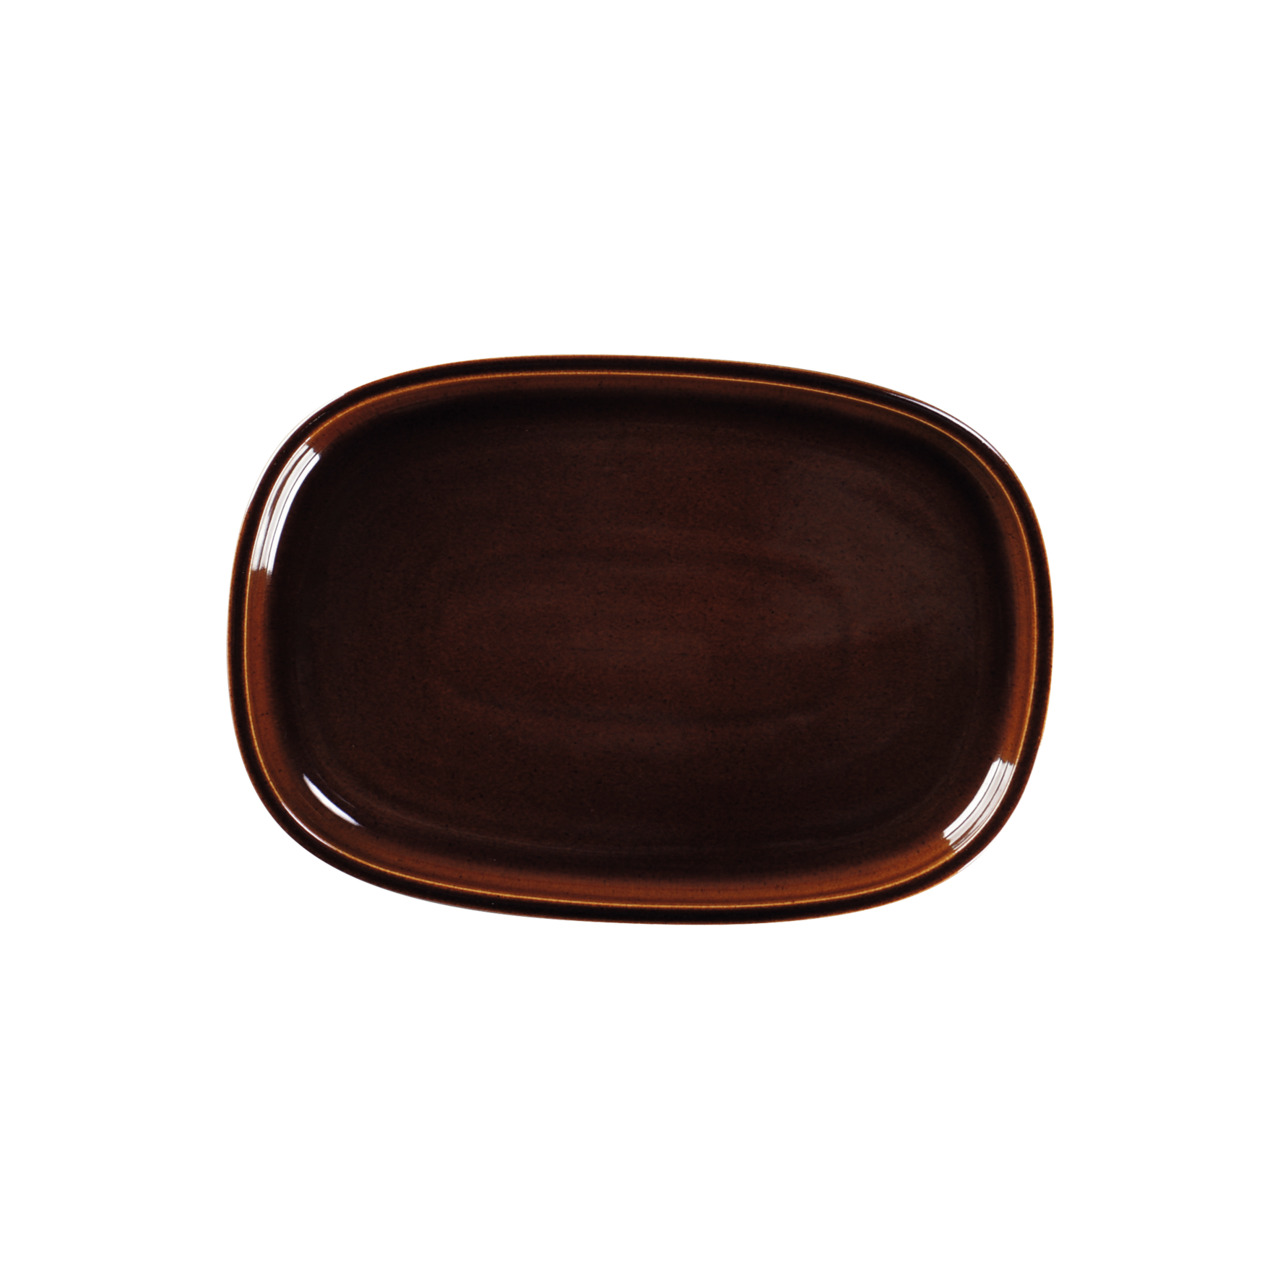 Ease, Platte oval flach 261 x 180 mm honey brown